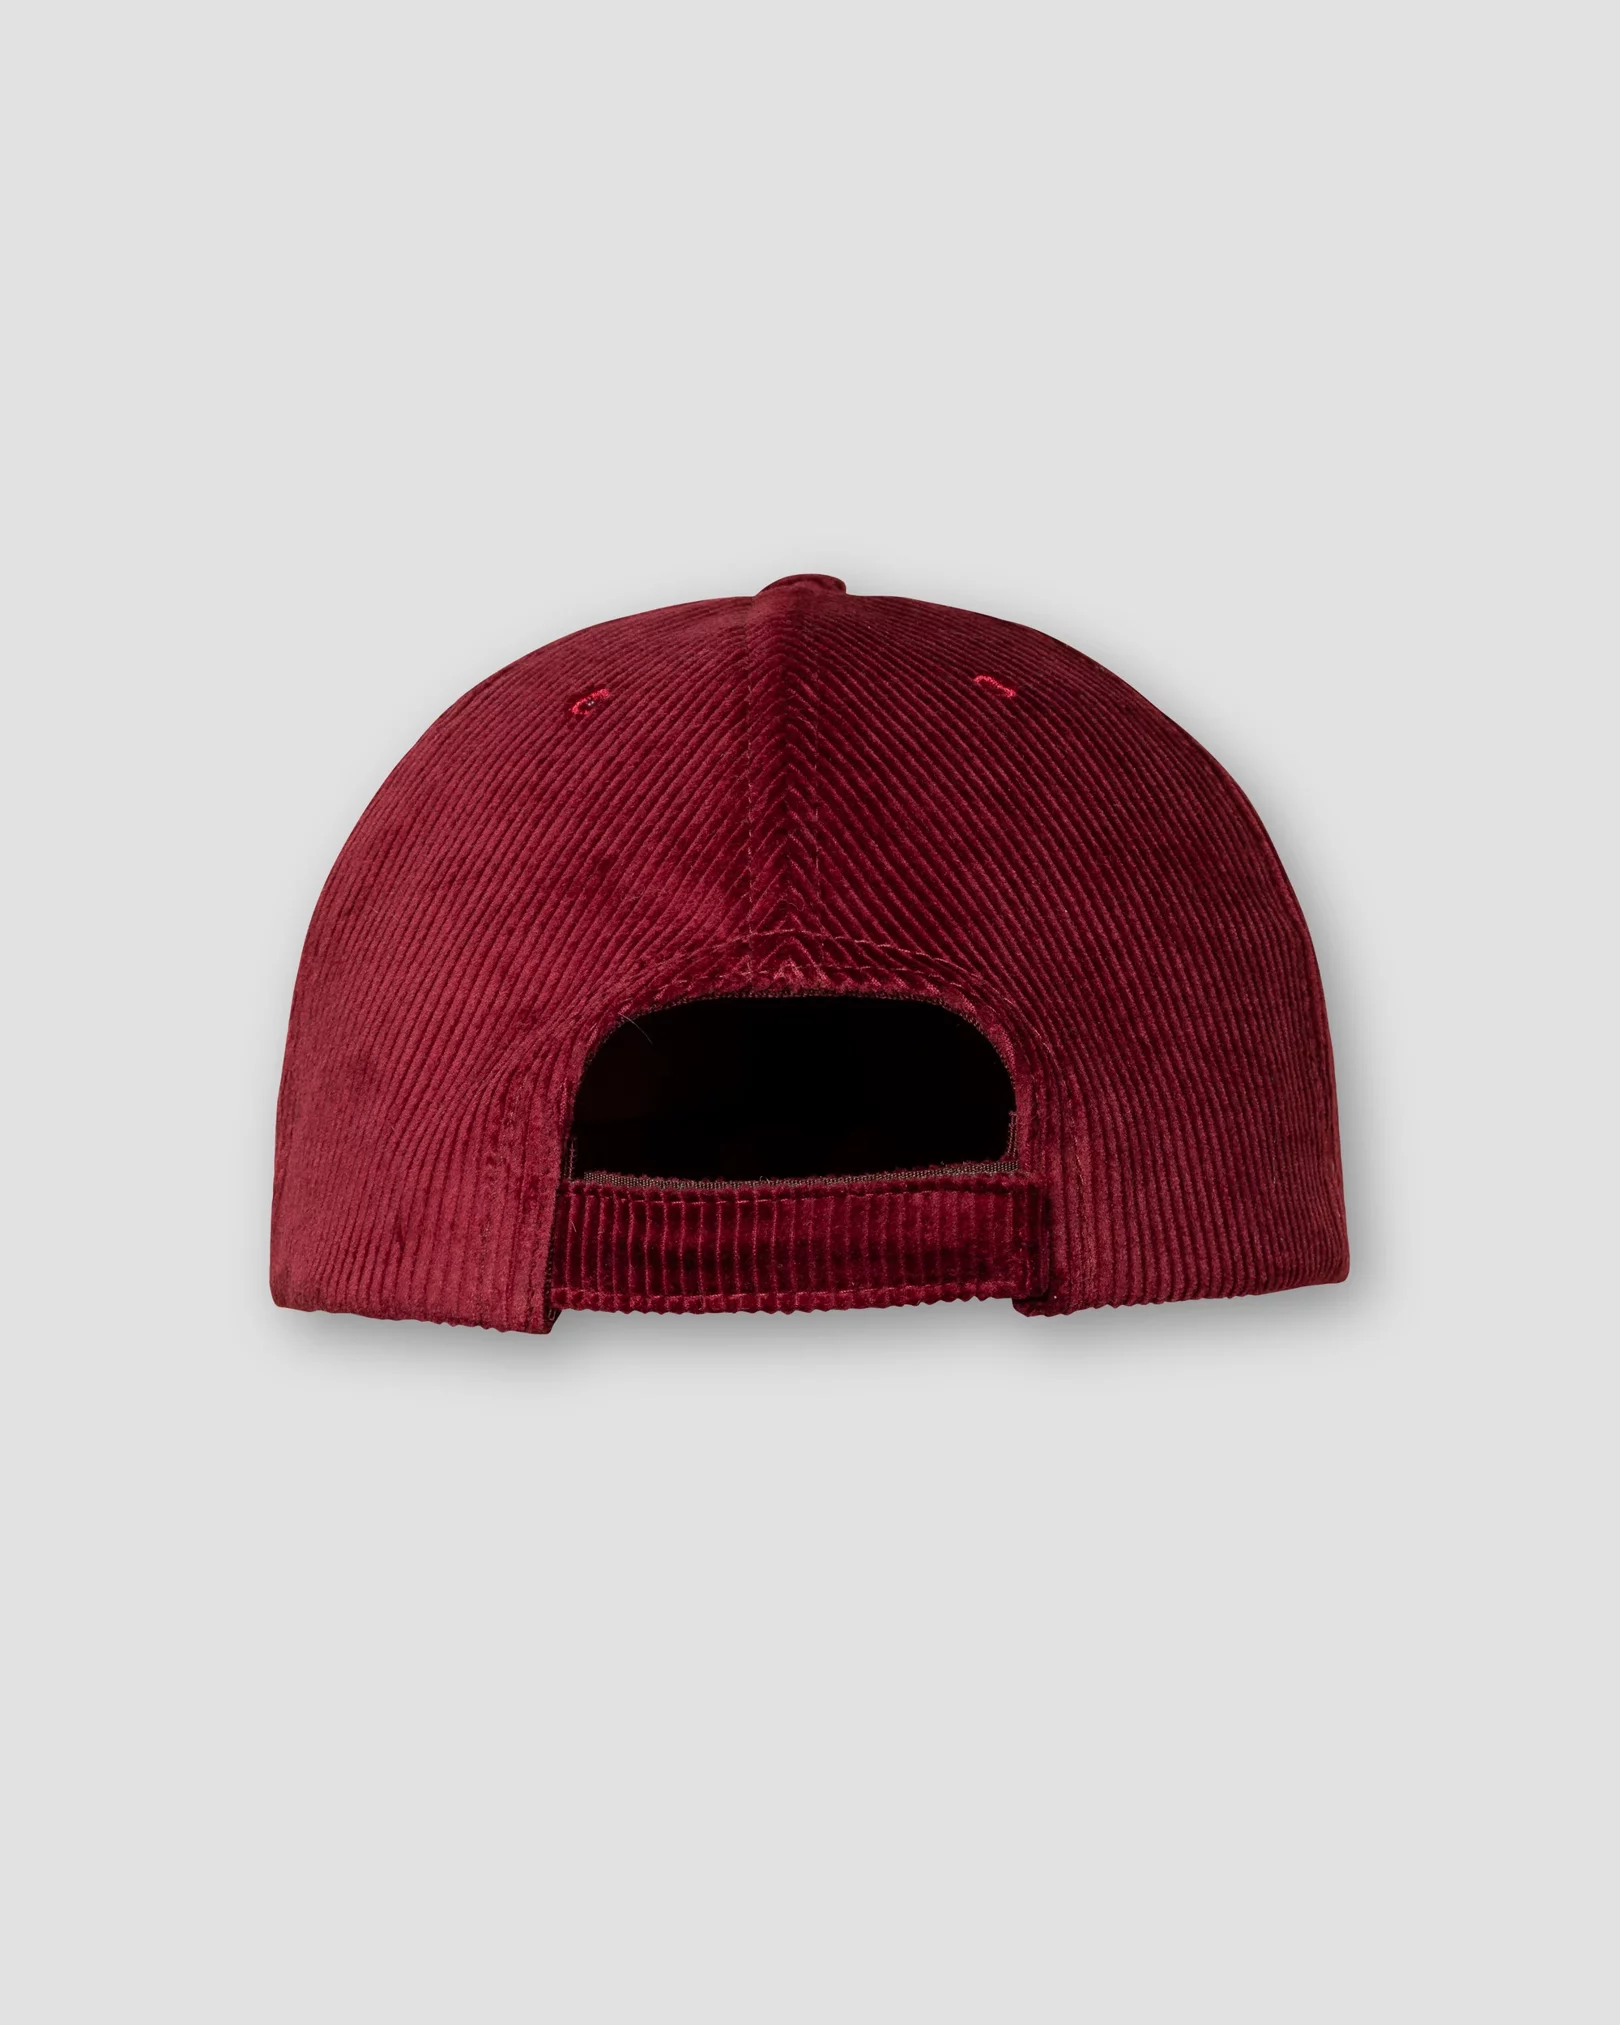 Eton - burgundy corduroy baseball cap